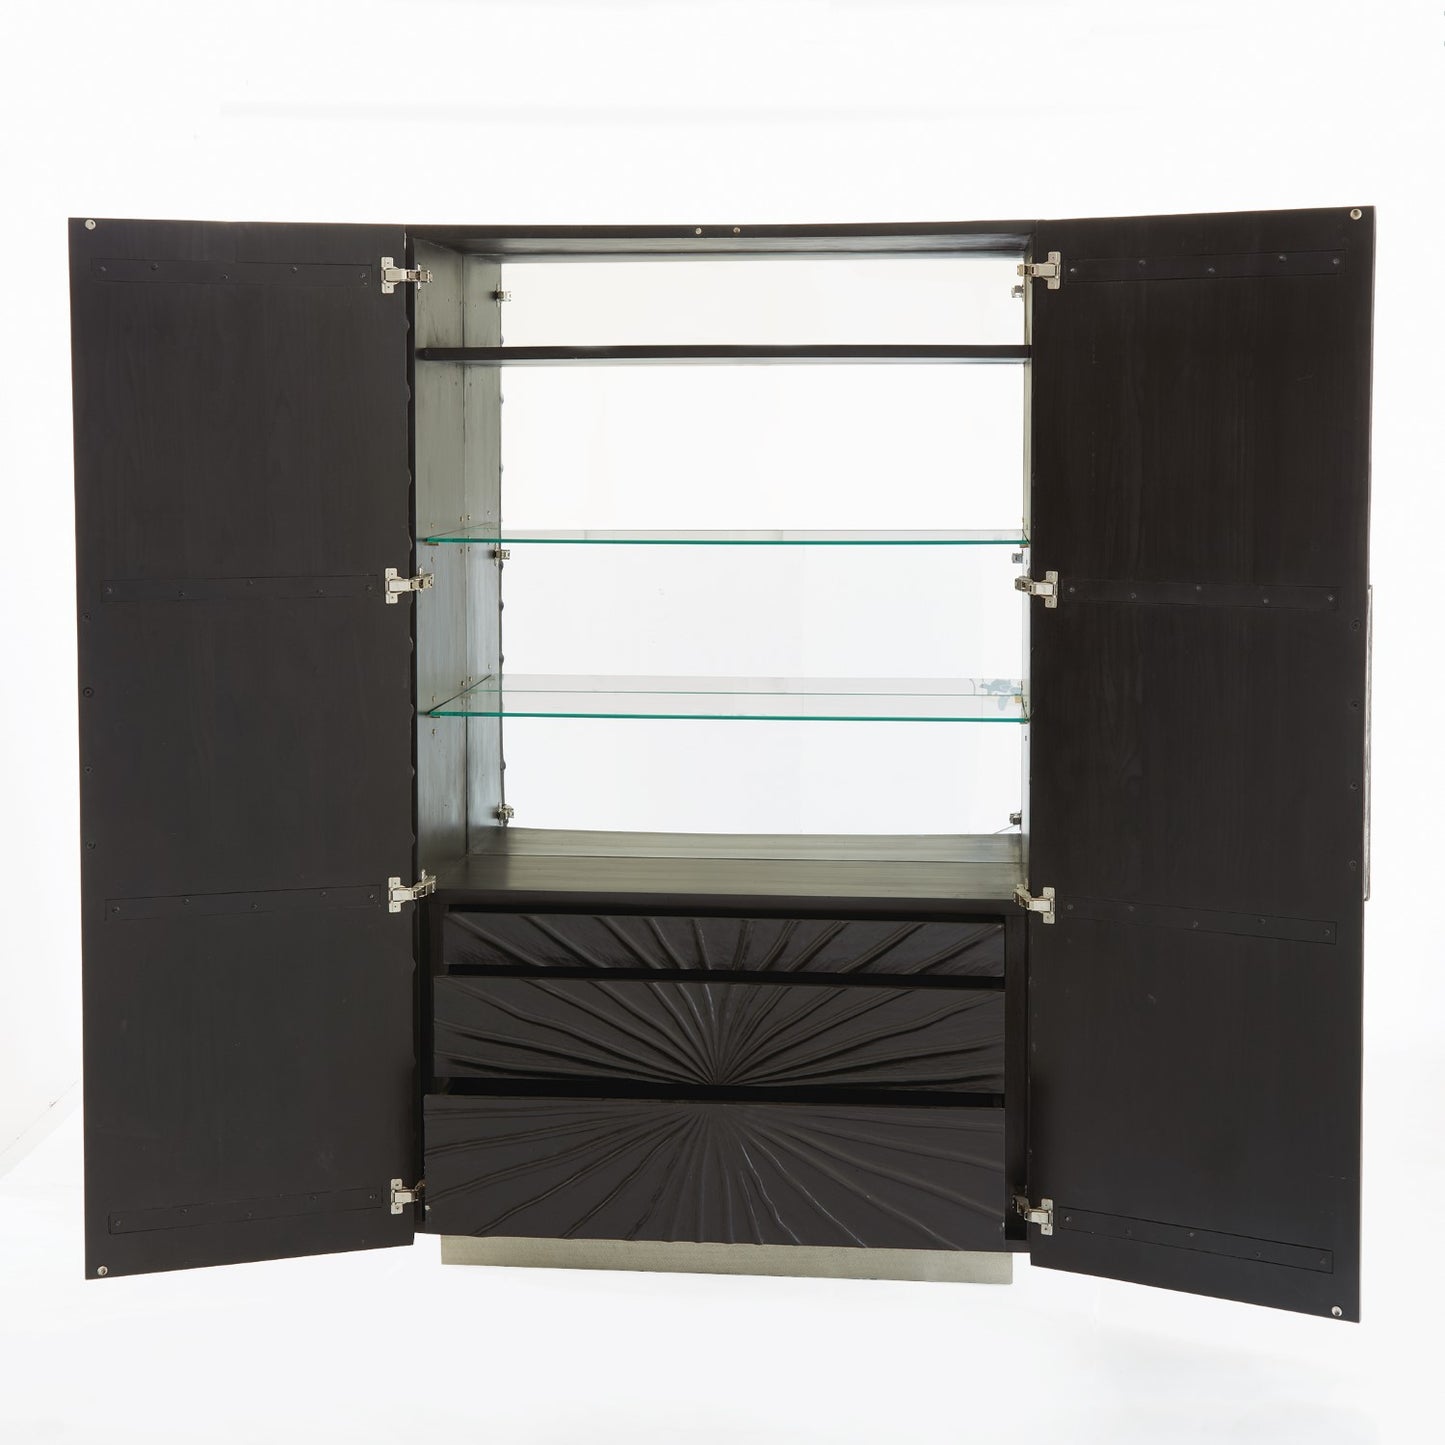 Pleated Cabinet - Grats Decor Interior Design & Build Inc.